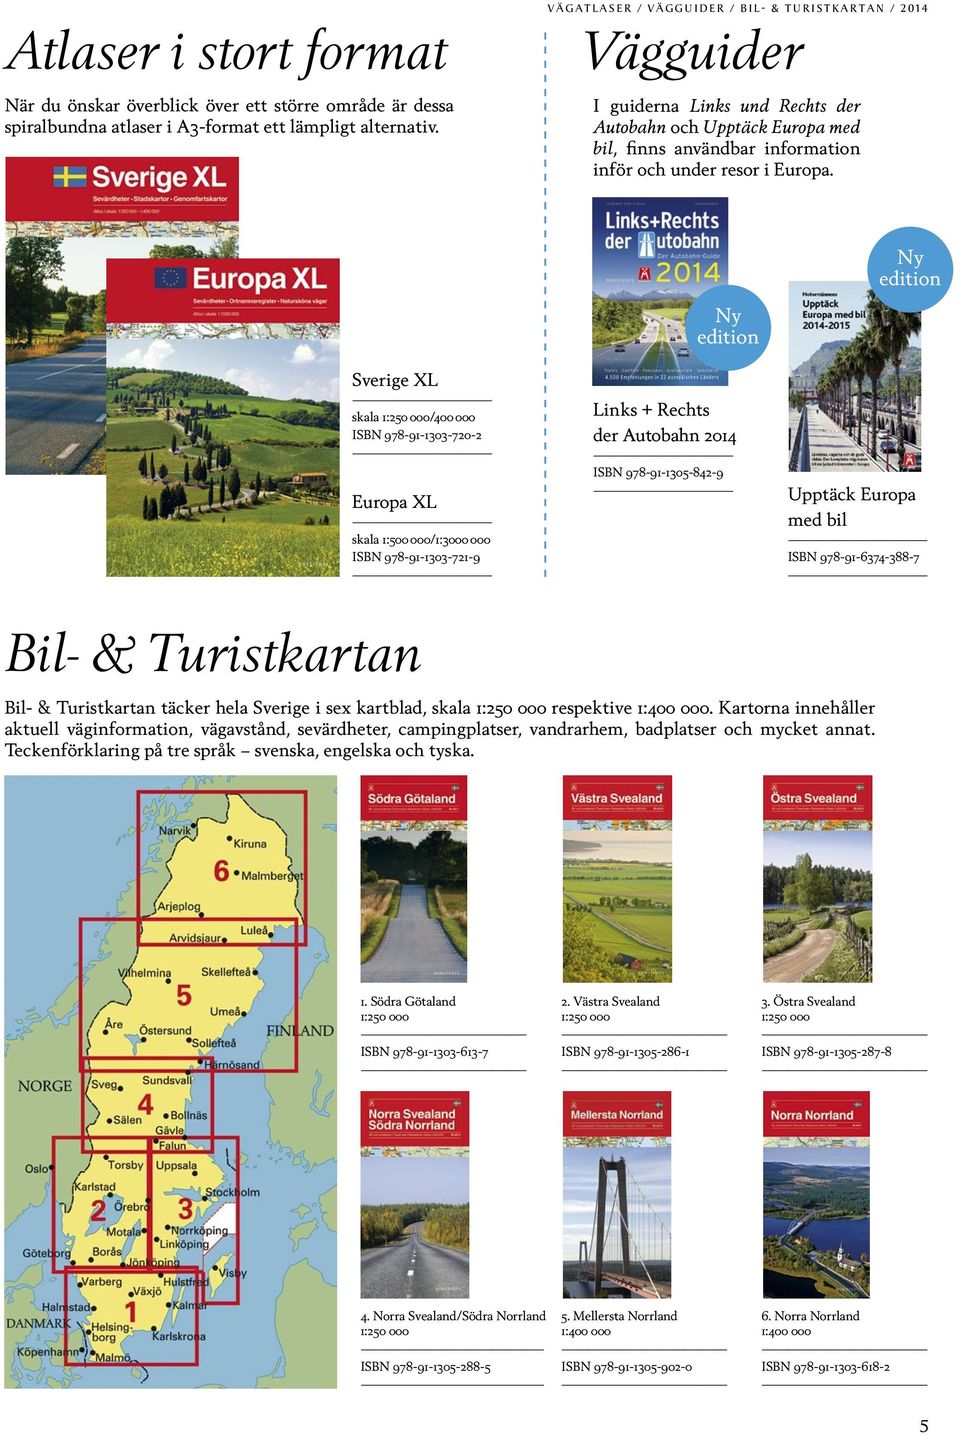 Ny edition Sverige XL skala 1:250 000/400 000 ISBN 978-91-1303-720-2 Europa XL skala 1:500 000/1:3000 000 ISBN 978-91-1303-721-9 Ny edition Links + Rechts der Autobahn 2014 ISBN 978-91-1305-842-9